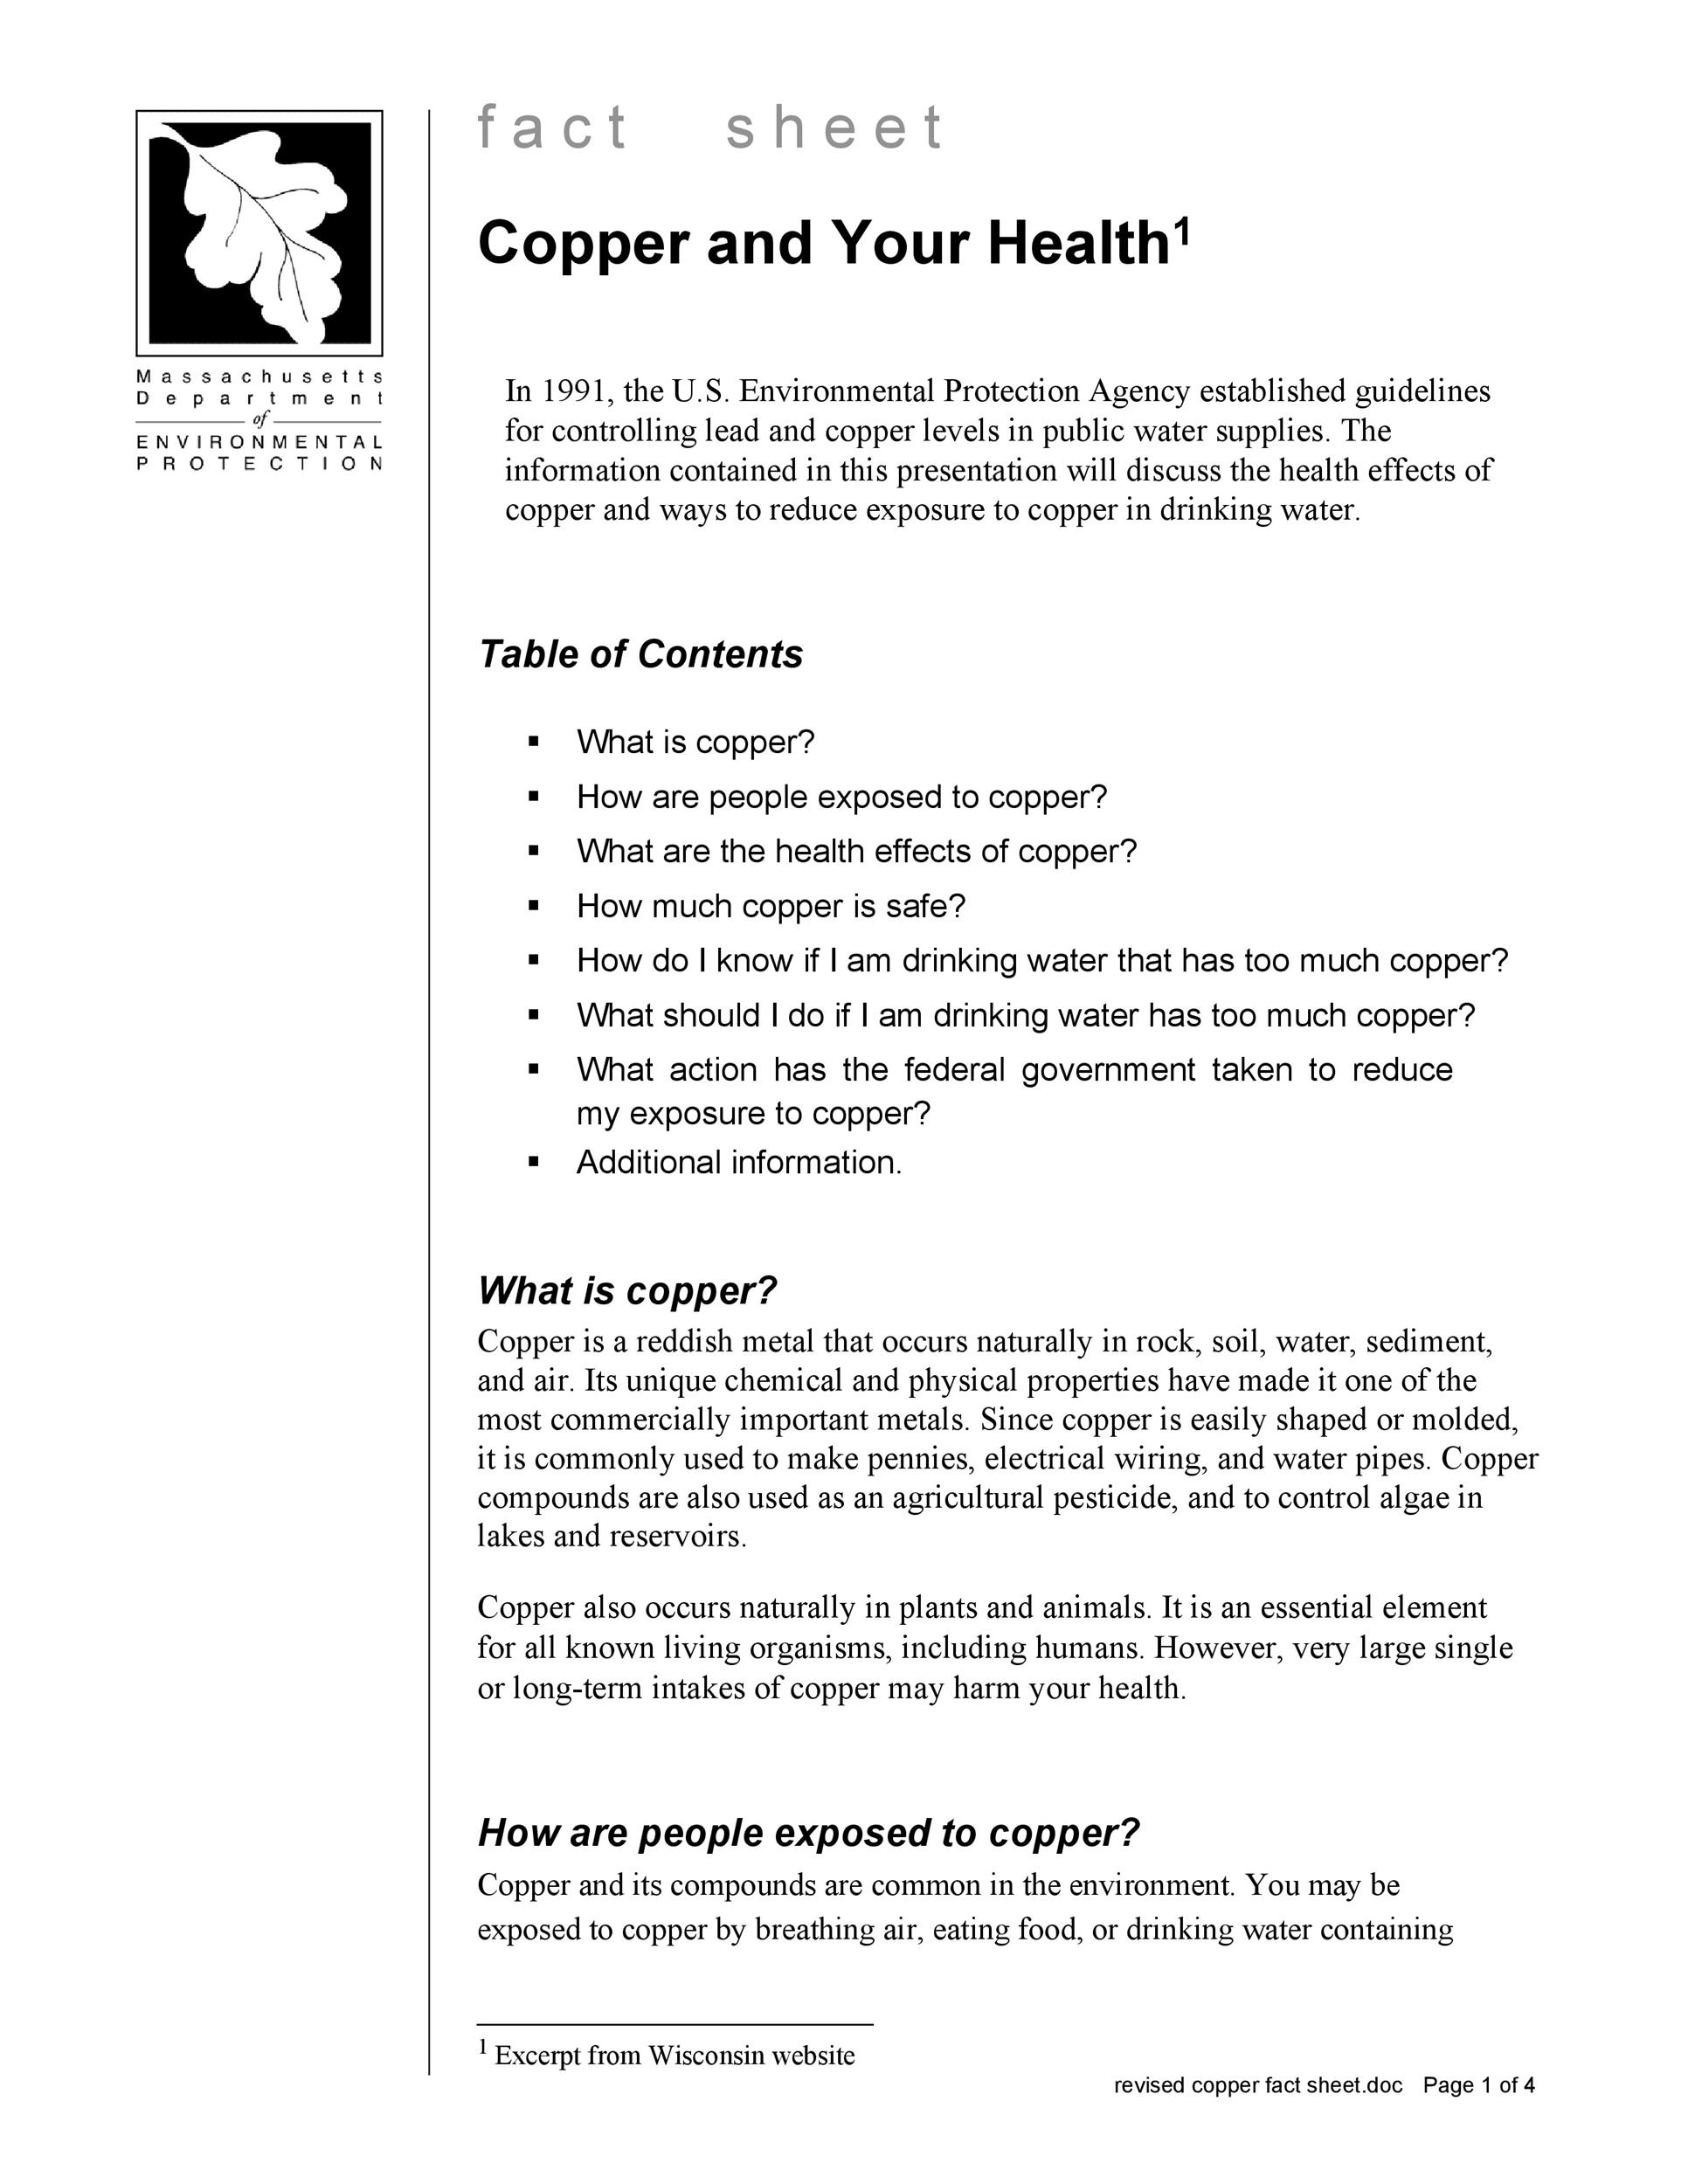 Company Info Sheet Template from templatelab.com